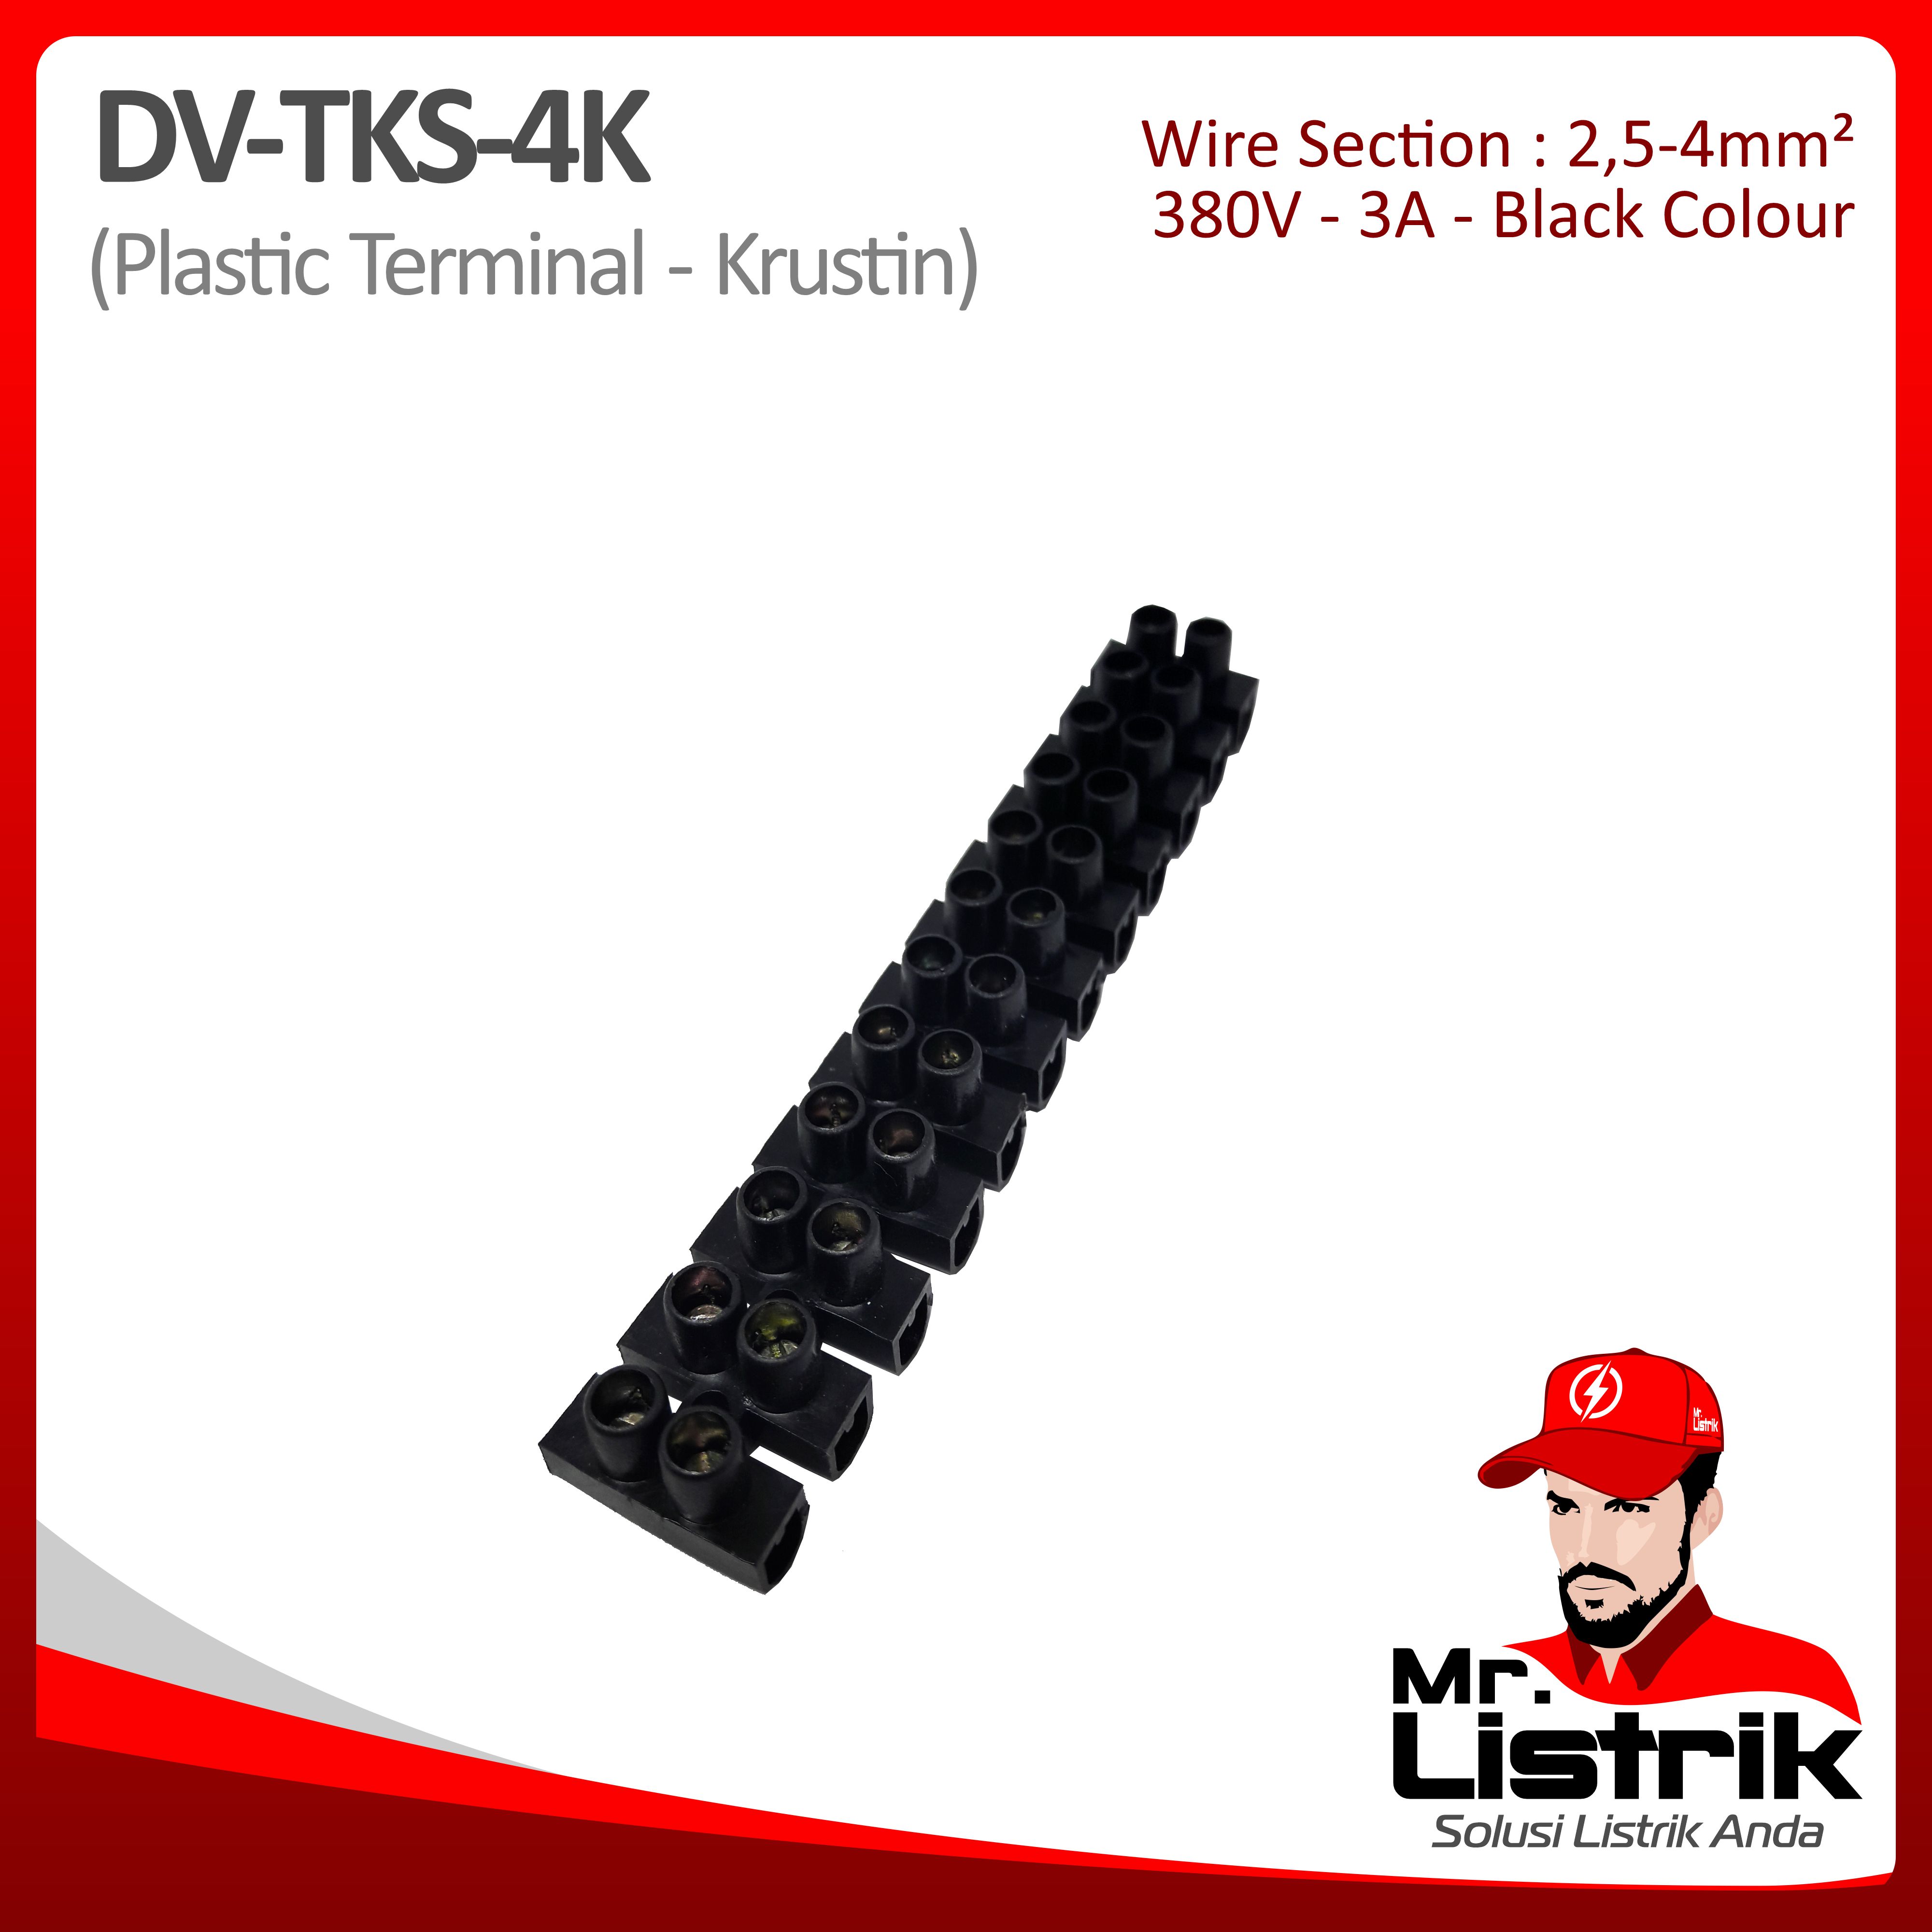 Terminal Block Krustin 2.5-4mm DV TKS-4K